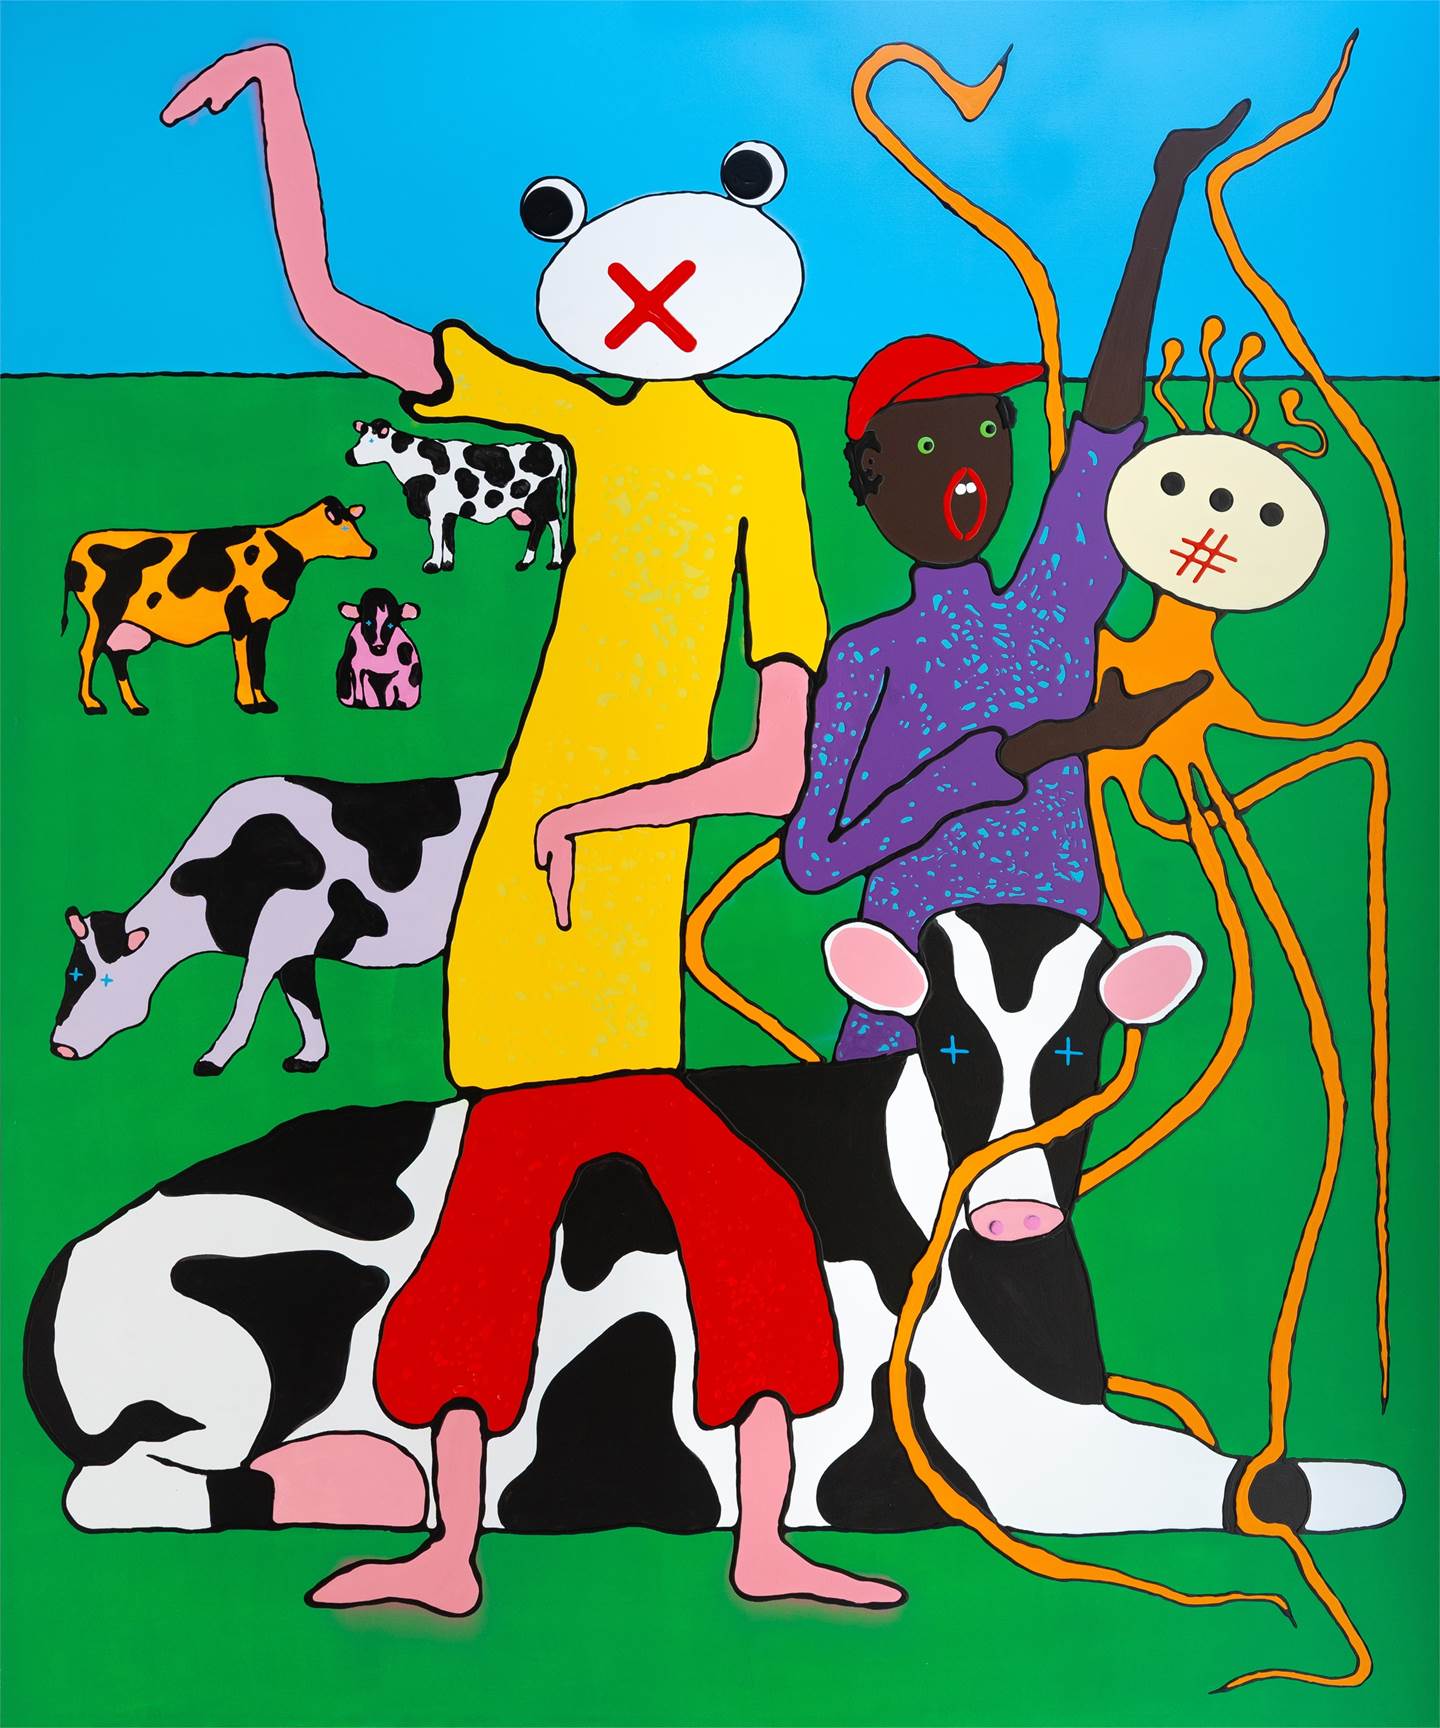 Dance among cows, original Portrait Acrylic Painting by Mario Louro